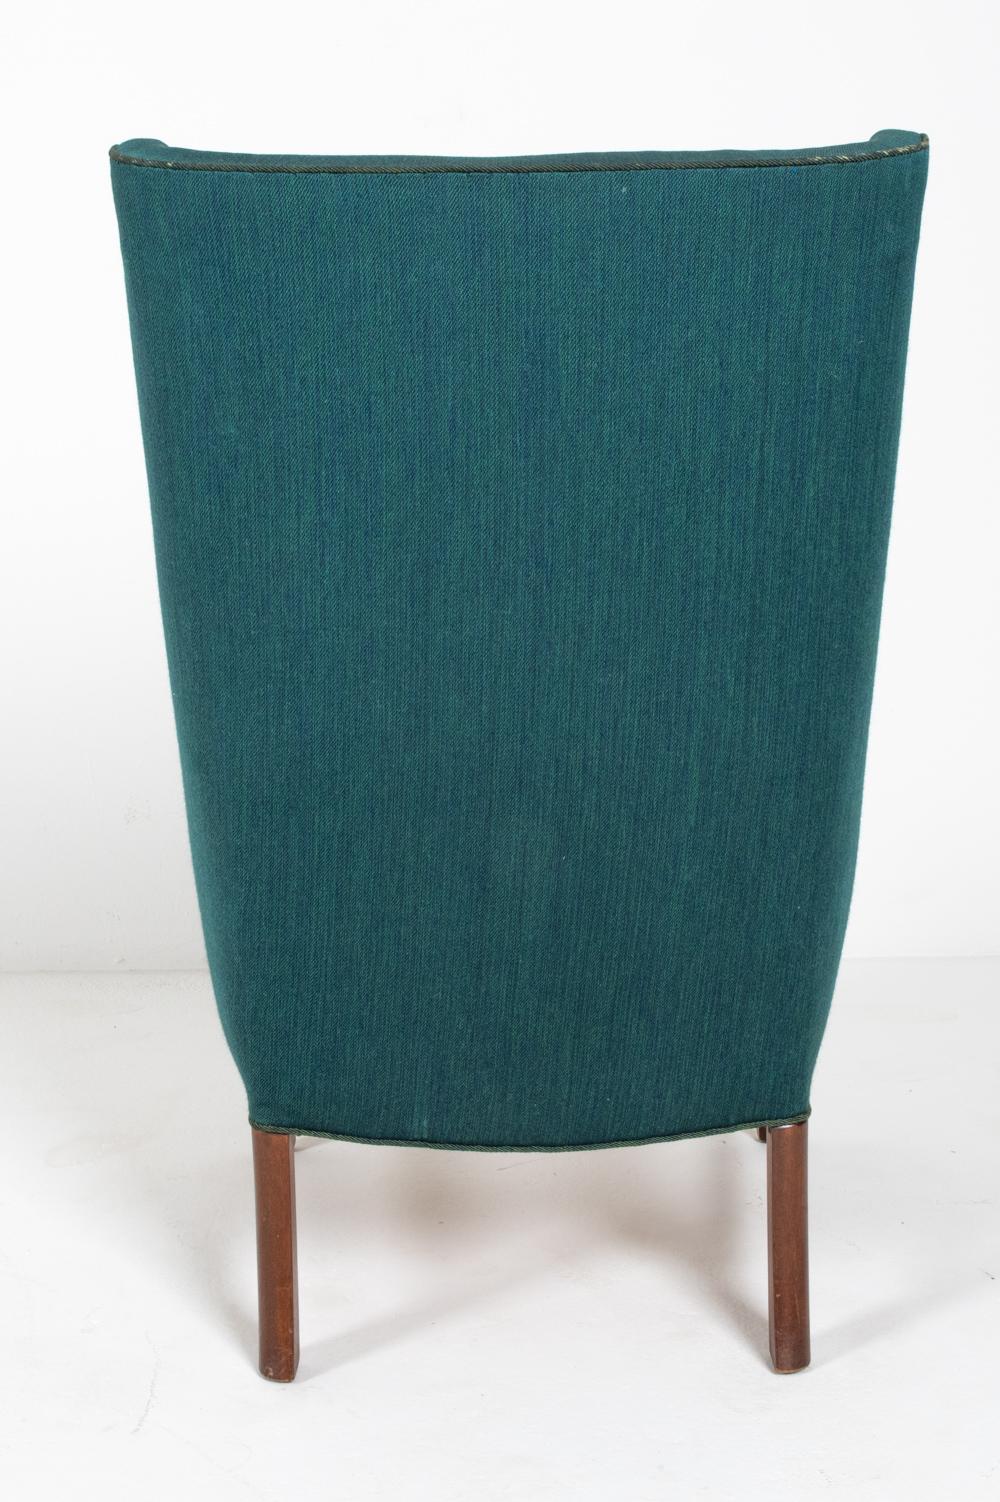 Frits Henningsen Danish Highback Lounge Chair, c. 1940's For Sale 8